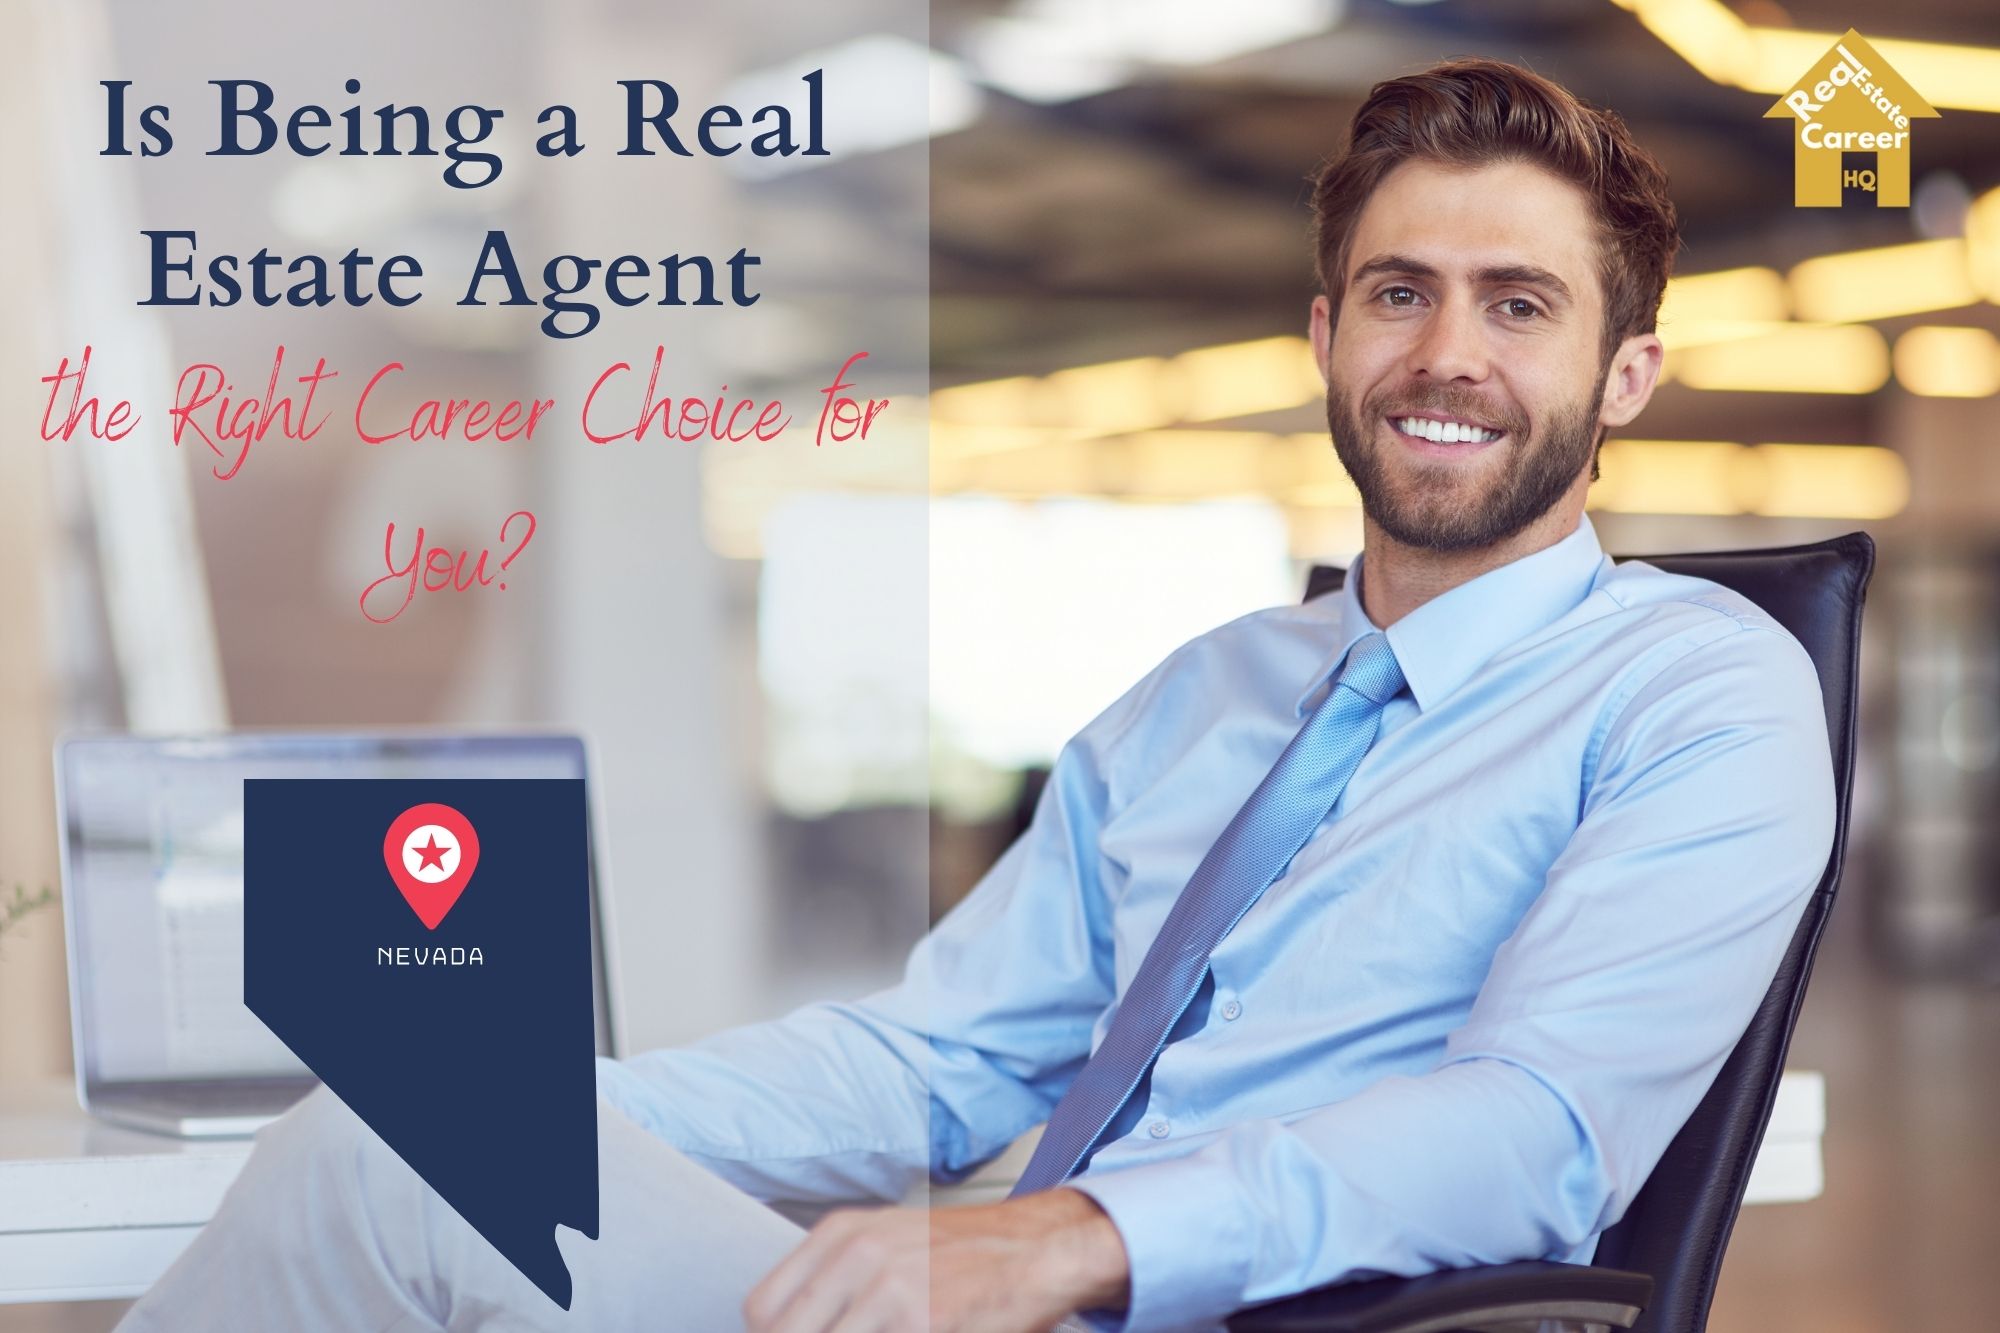 Nevada Real Estate Agent Career